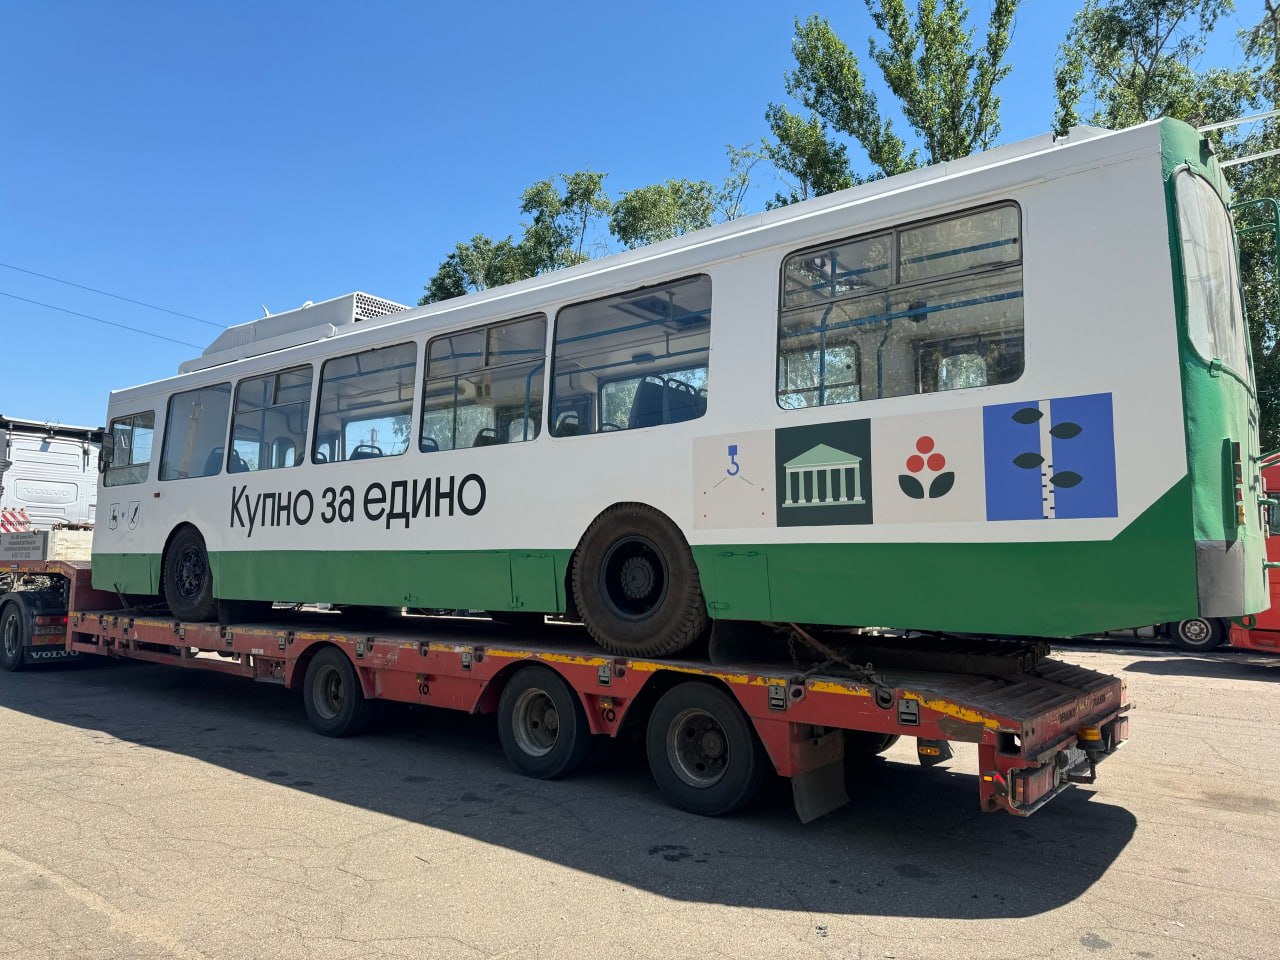 Нижний Новгород подарил 16 троллейбусов городу в ДНР